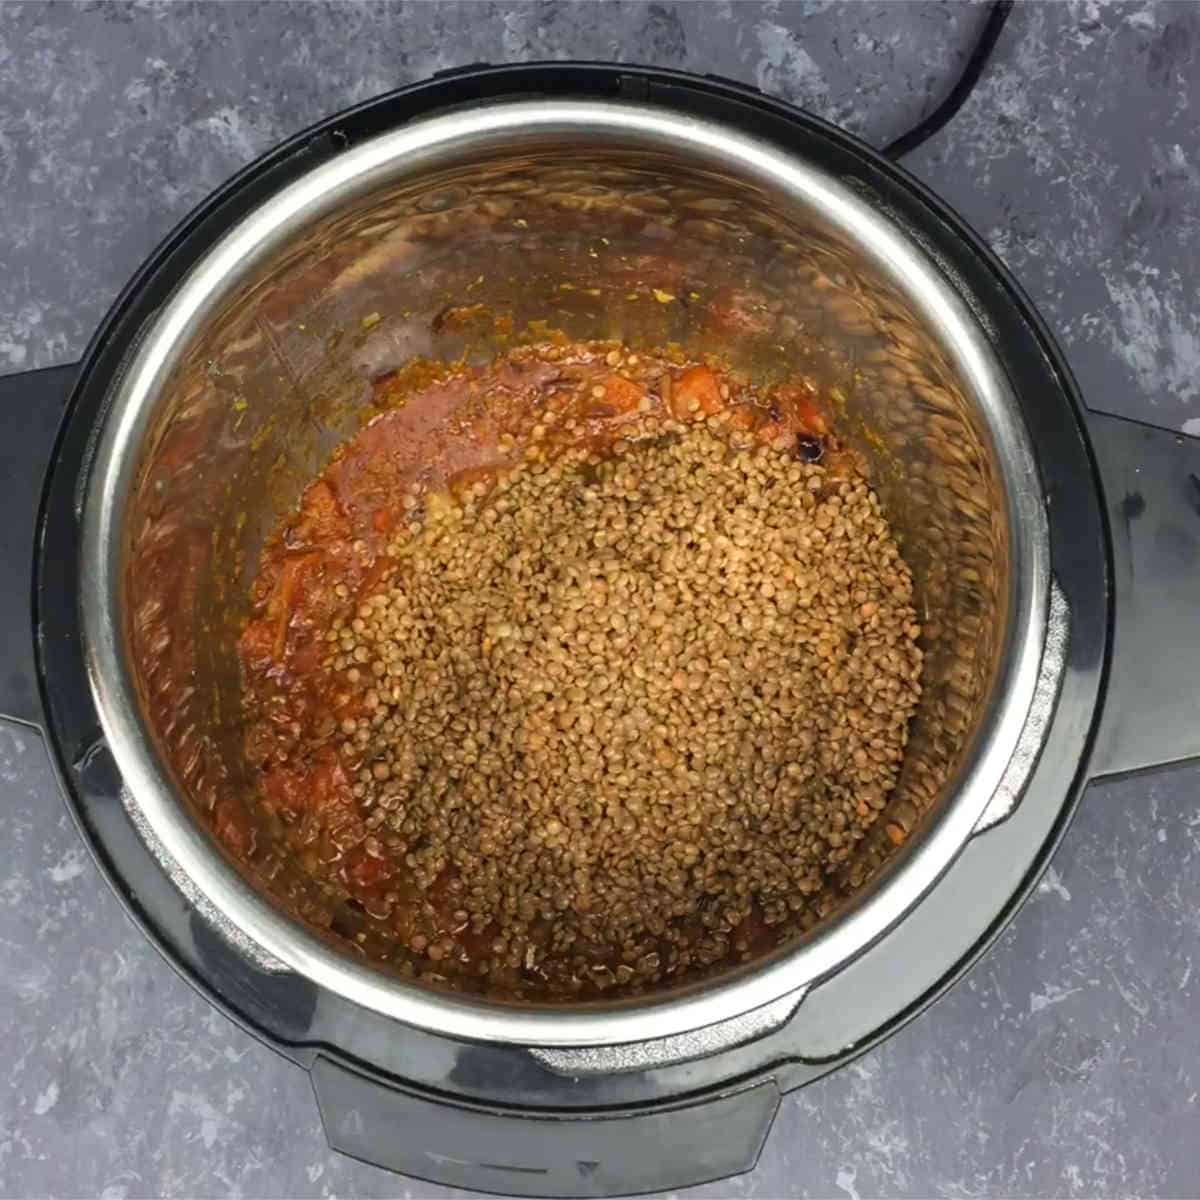 Add brown lentils.